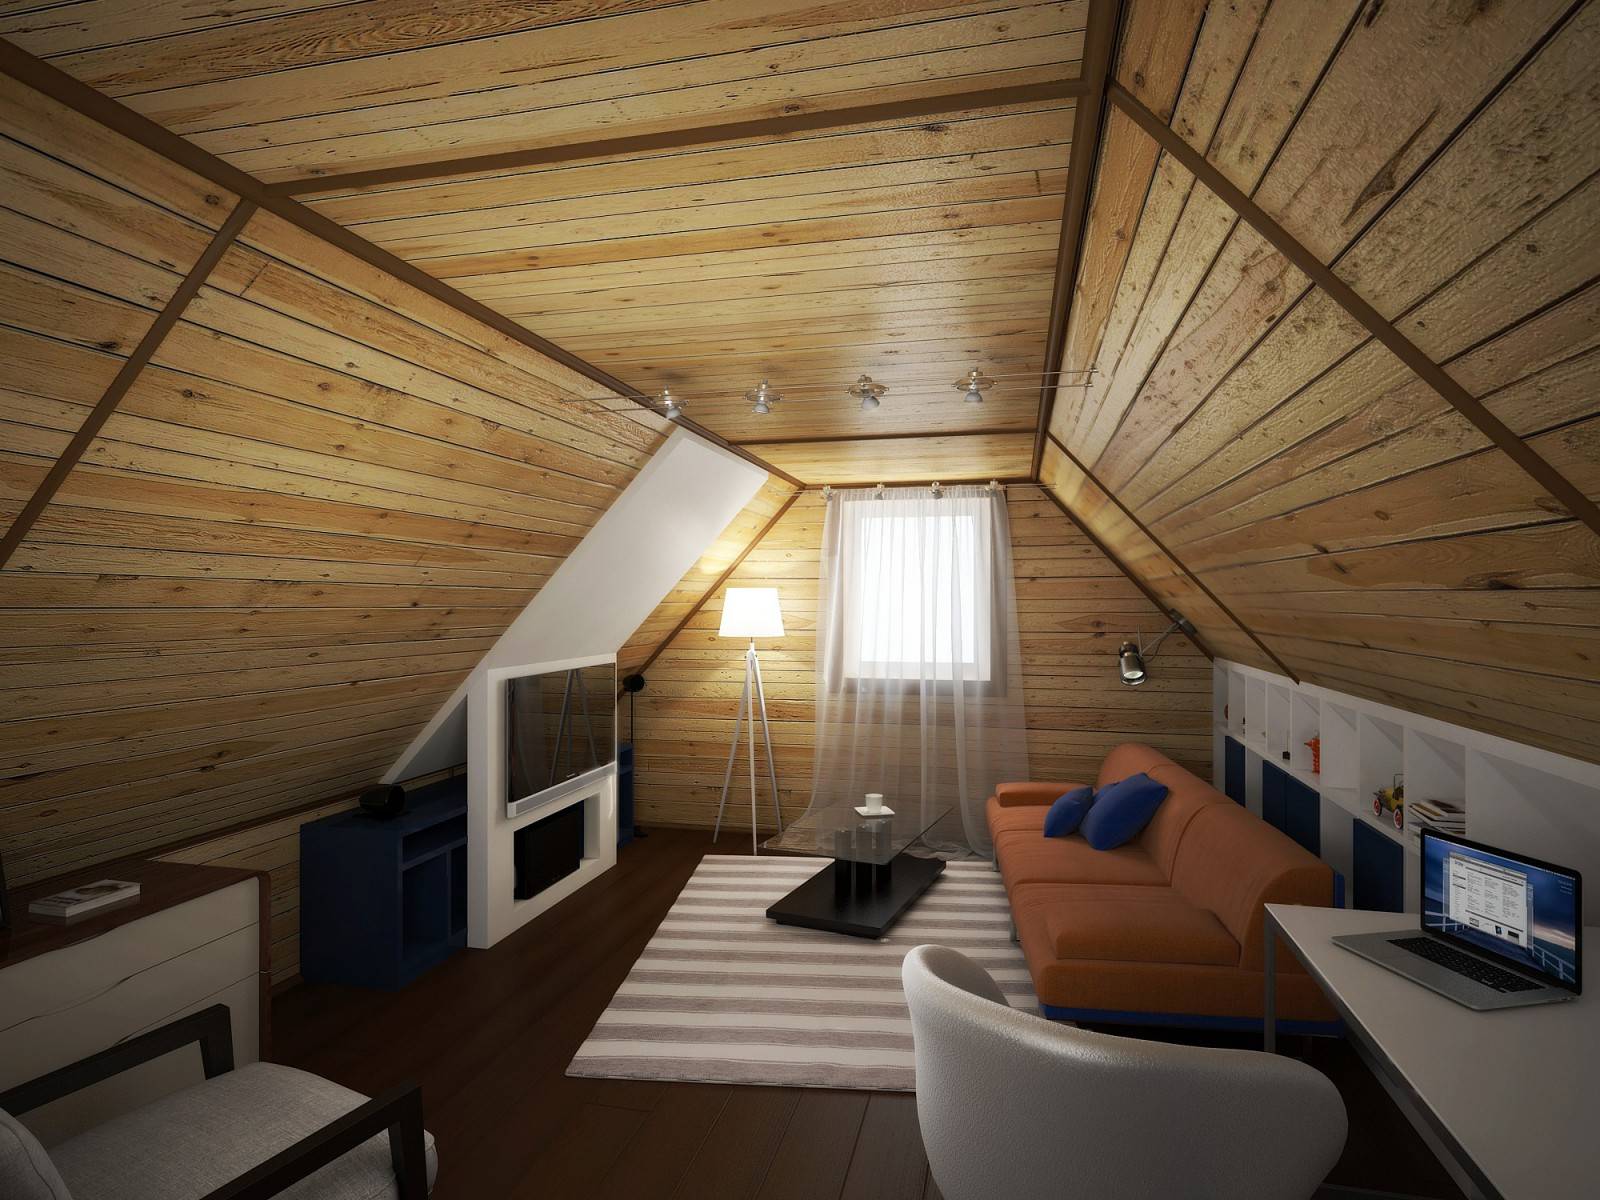 Комната отдыха в бане (52 фото) — дизайн интерьера со спальней на втором этаже, отделка внутри бани на даче